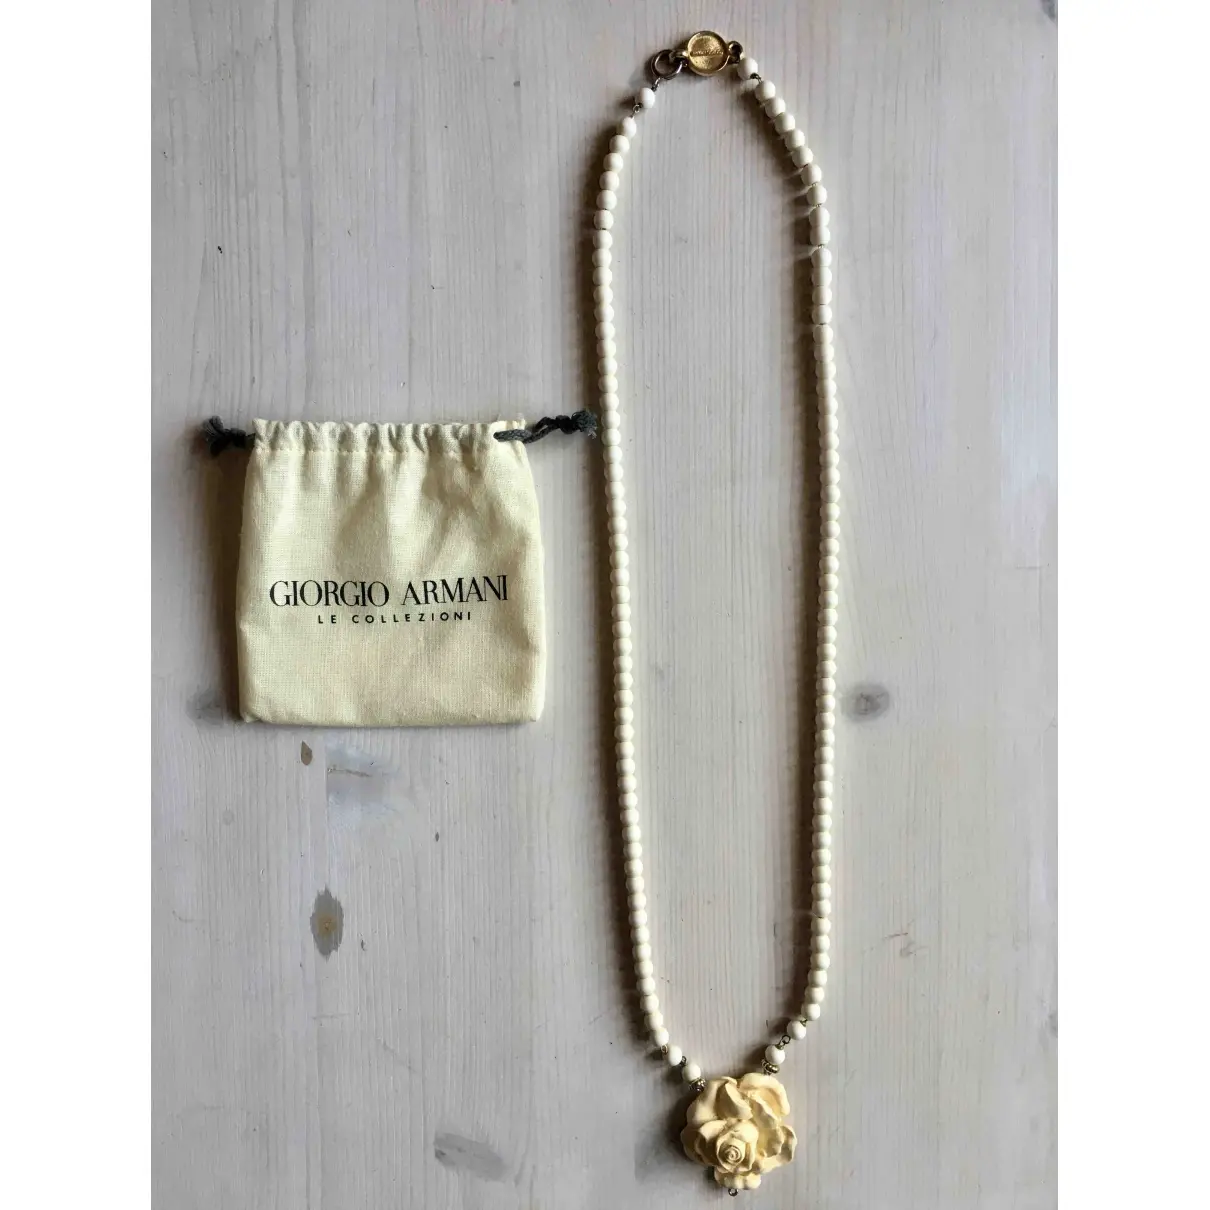 Buy Giorgio Armani Necklace online